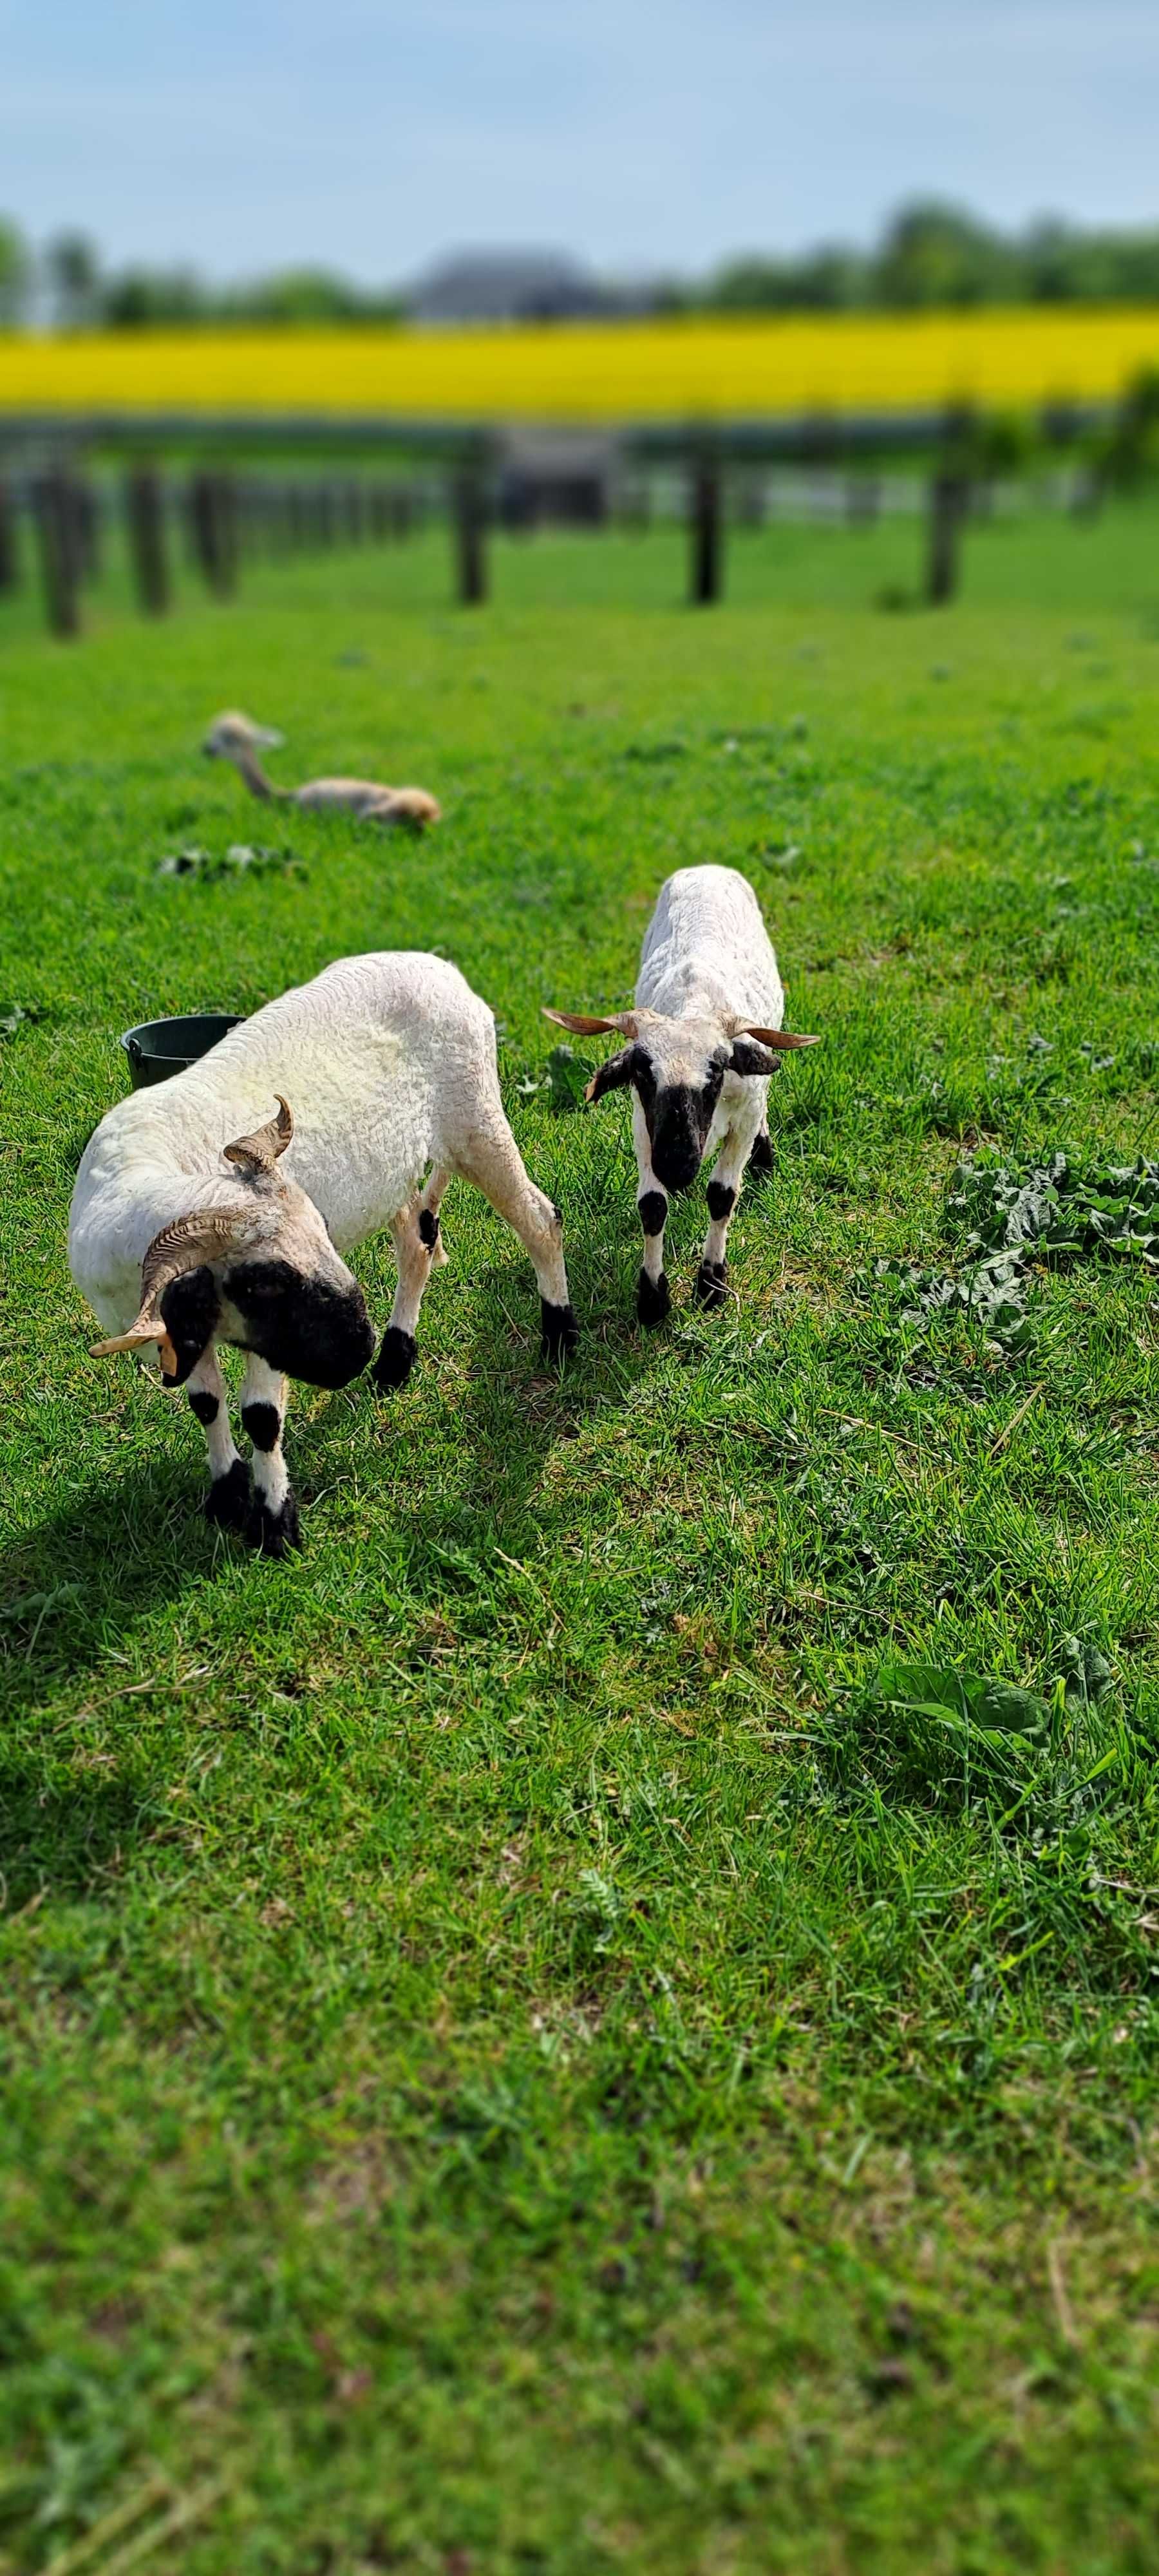 Owce walliserskie czarnonose